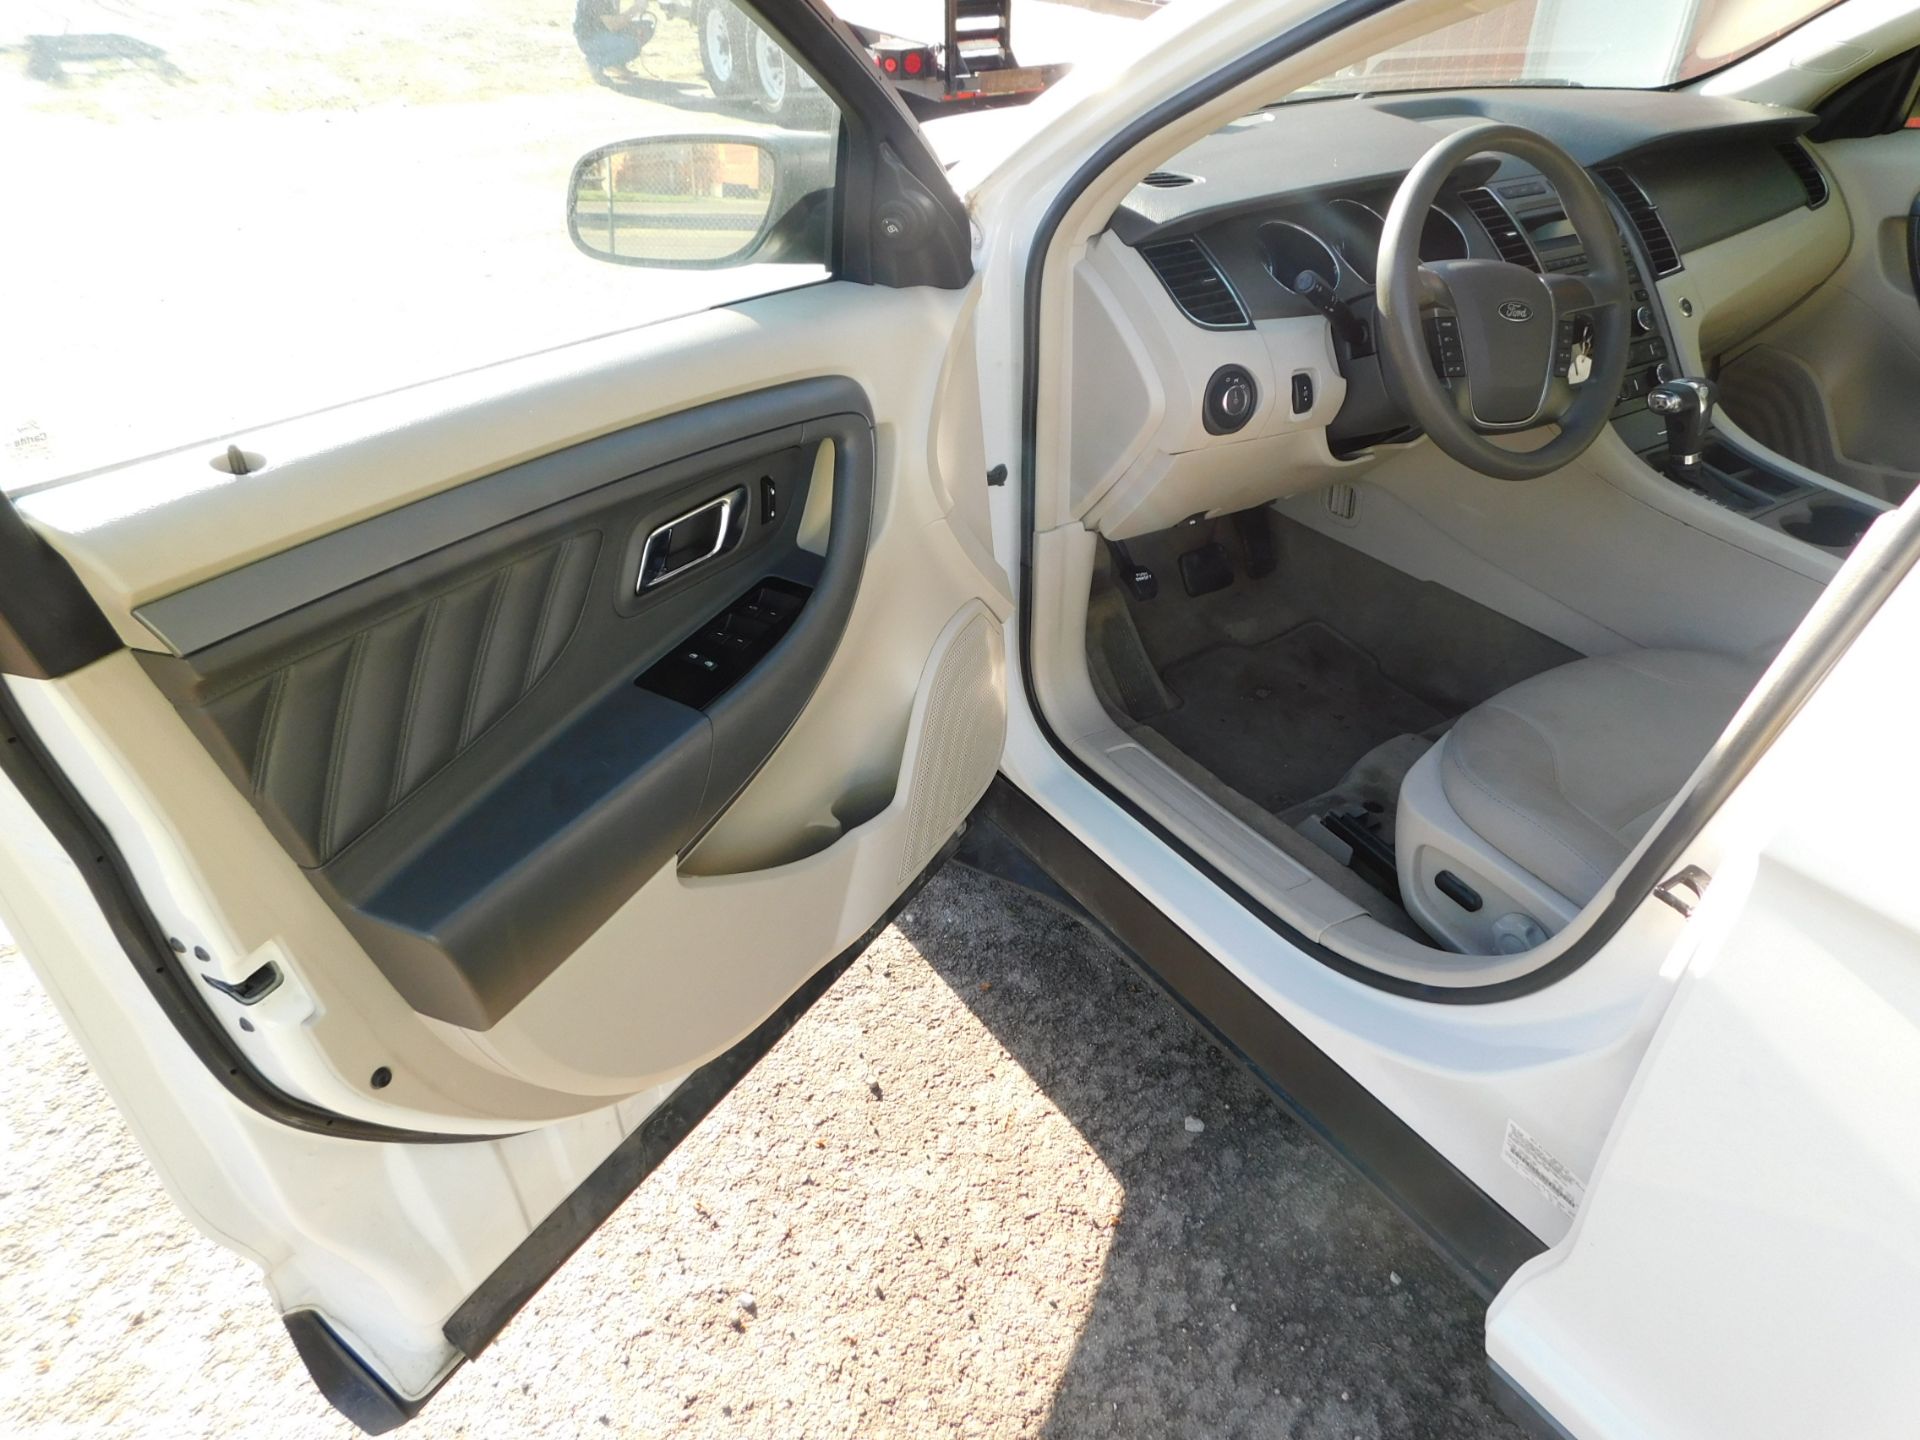 2011 Ford Taurus 4-Door Sedan vin 1FAHP20WXBG16330, Automatic Transmission, PW,PL, AC, Cloth - Image 22 of 41